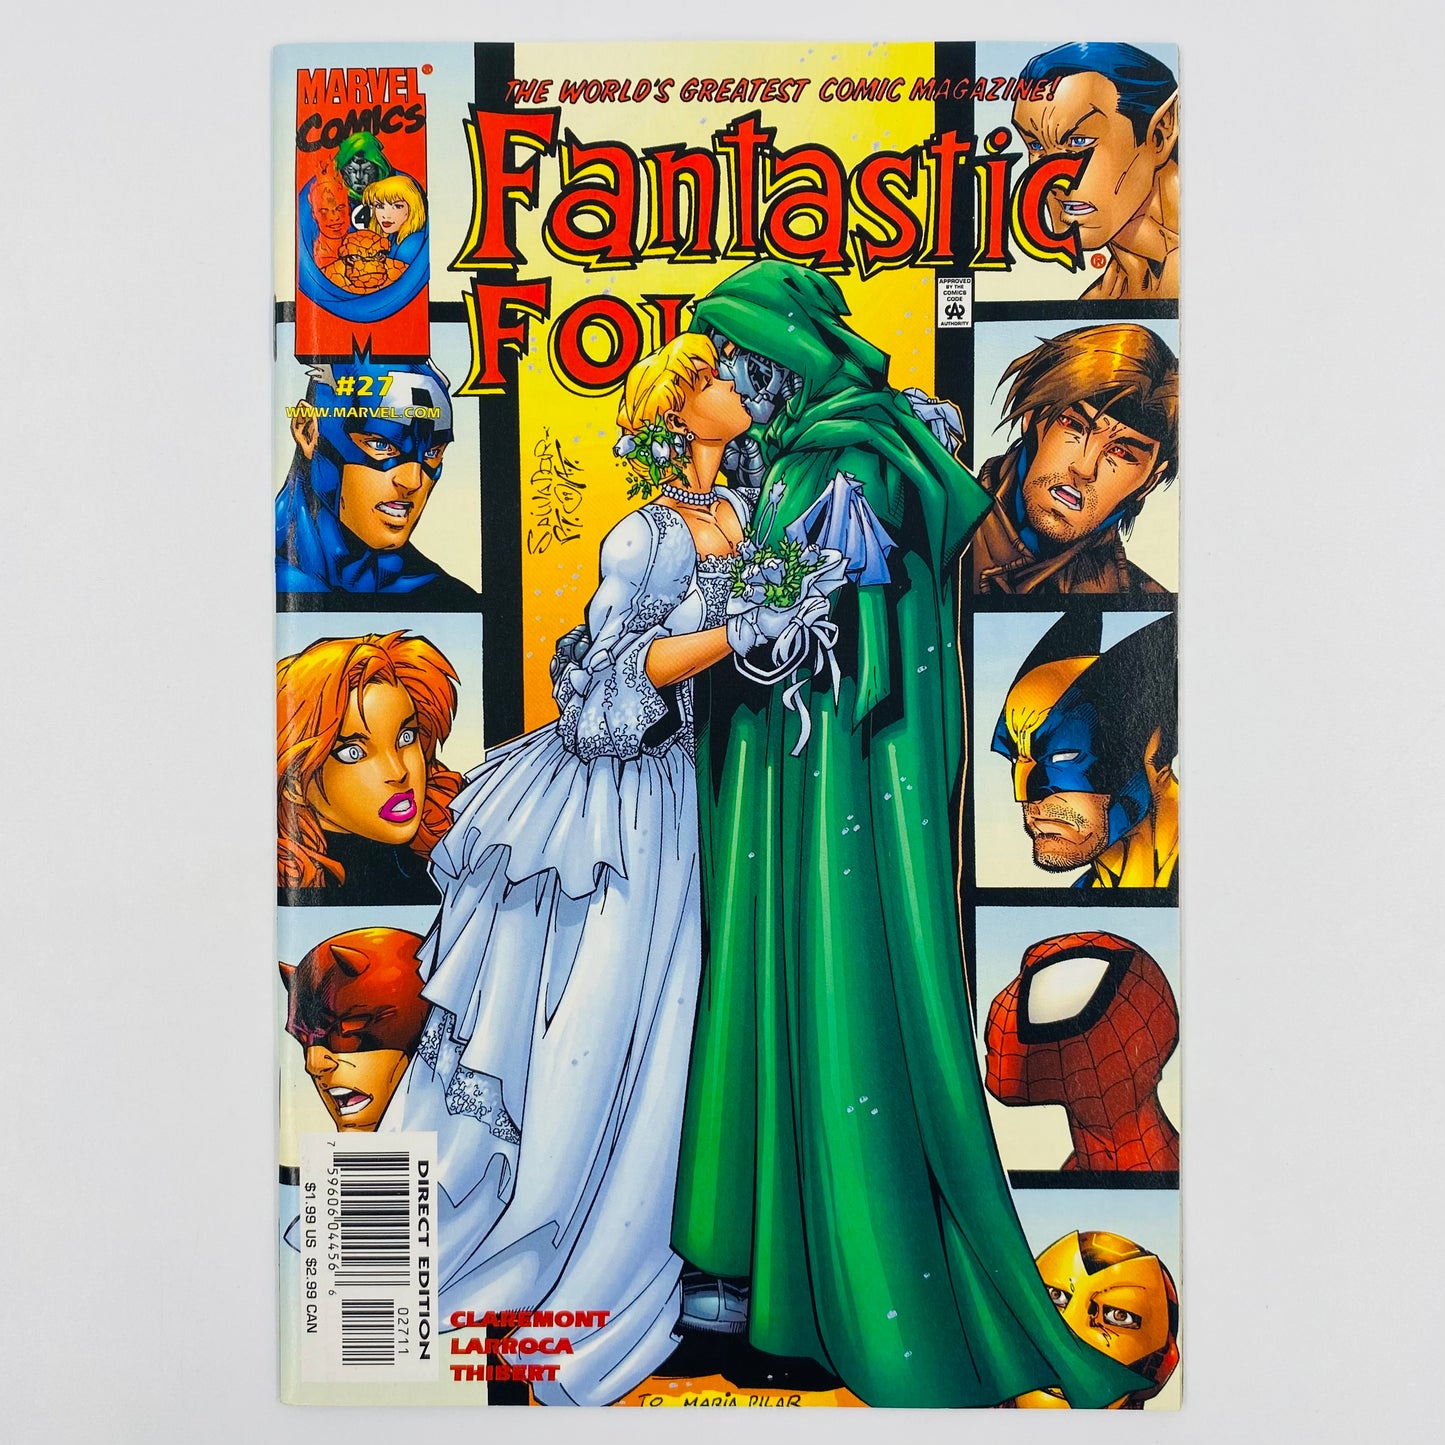 Fantastic Four #1-34 & annual 2000 (1998-2000) Heroes Reborn Doctor Doom parts 1-7 (2000) Marvel